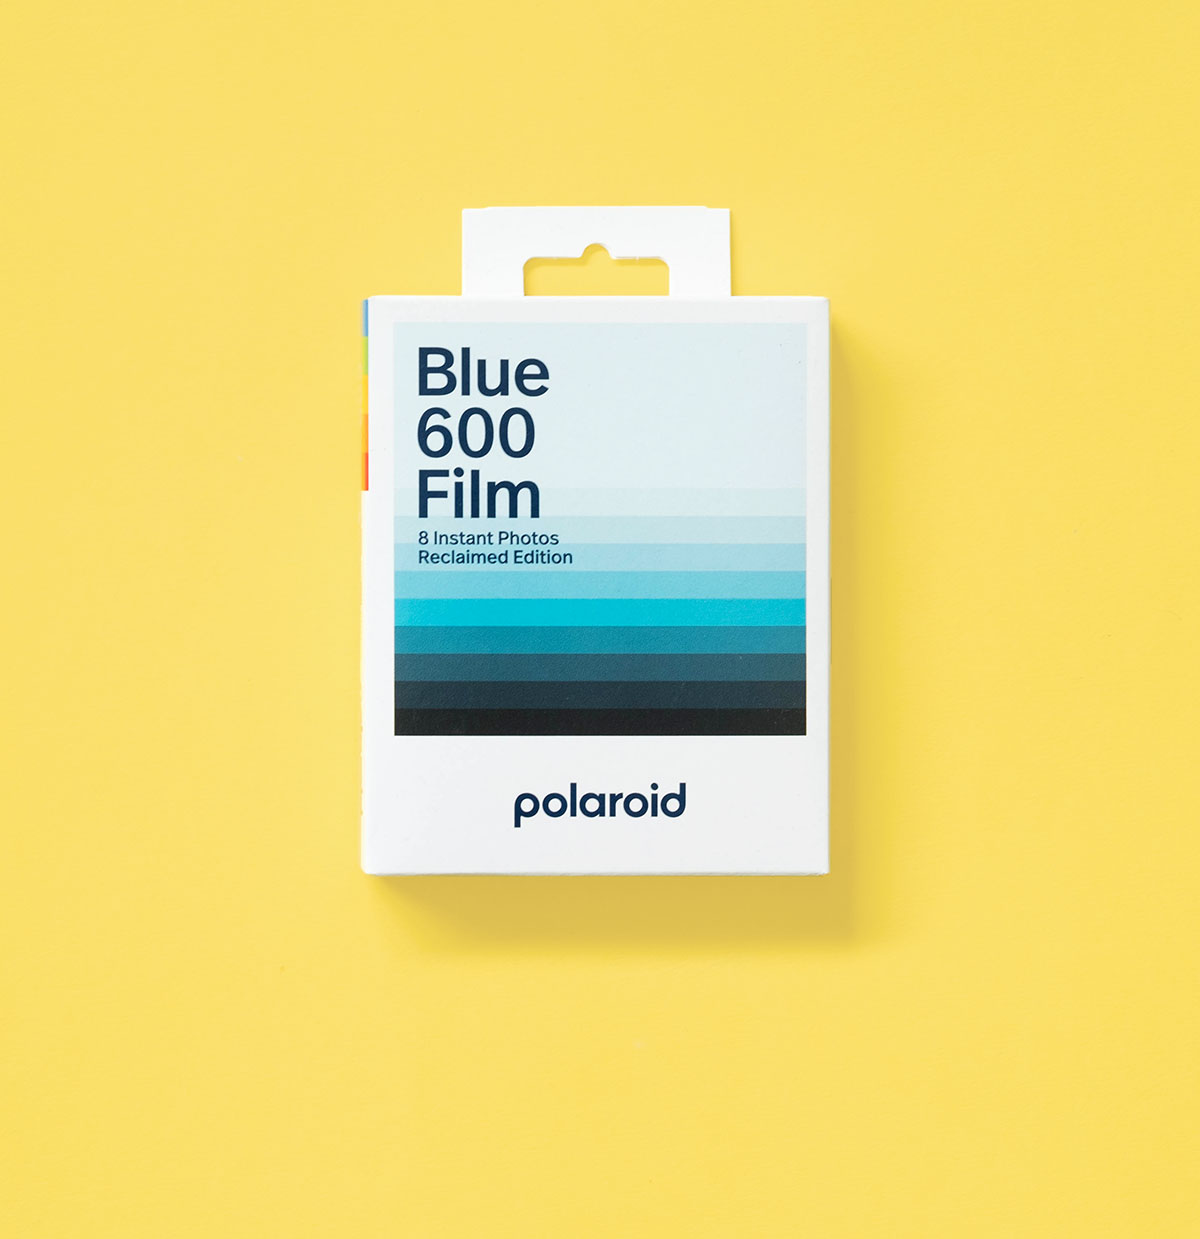 Migo - Polaroid Blue 600 Film - Reclaimed Edition